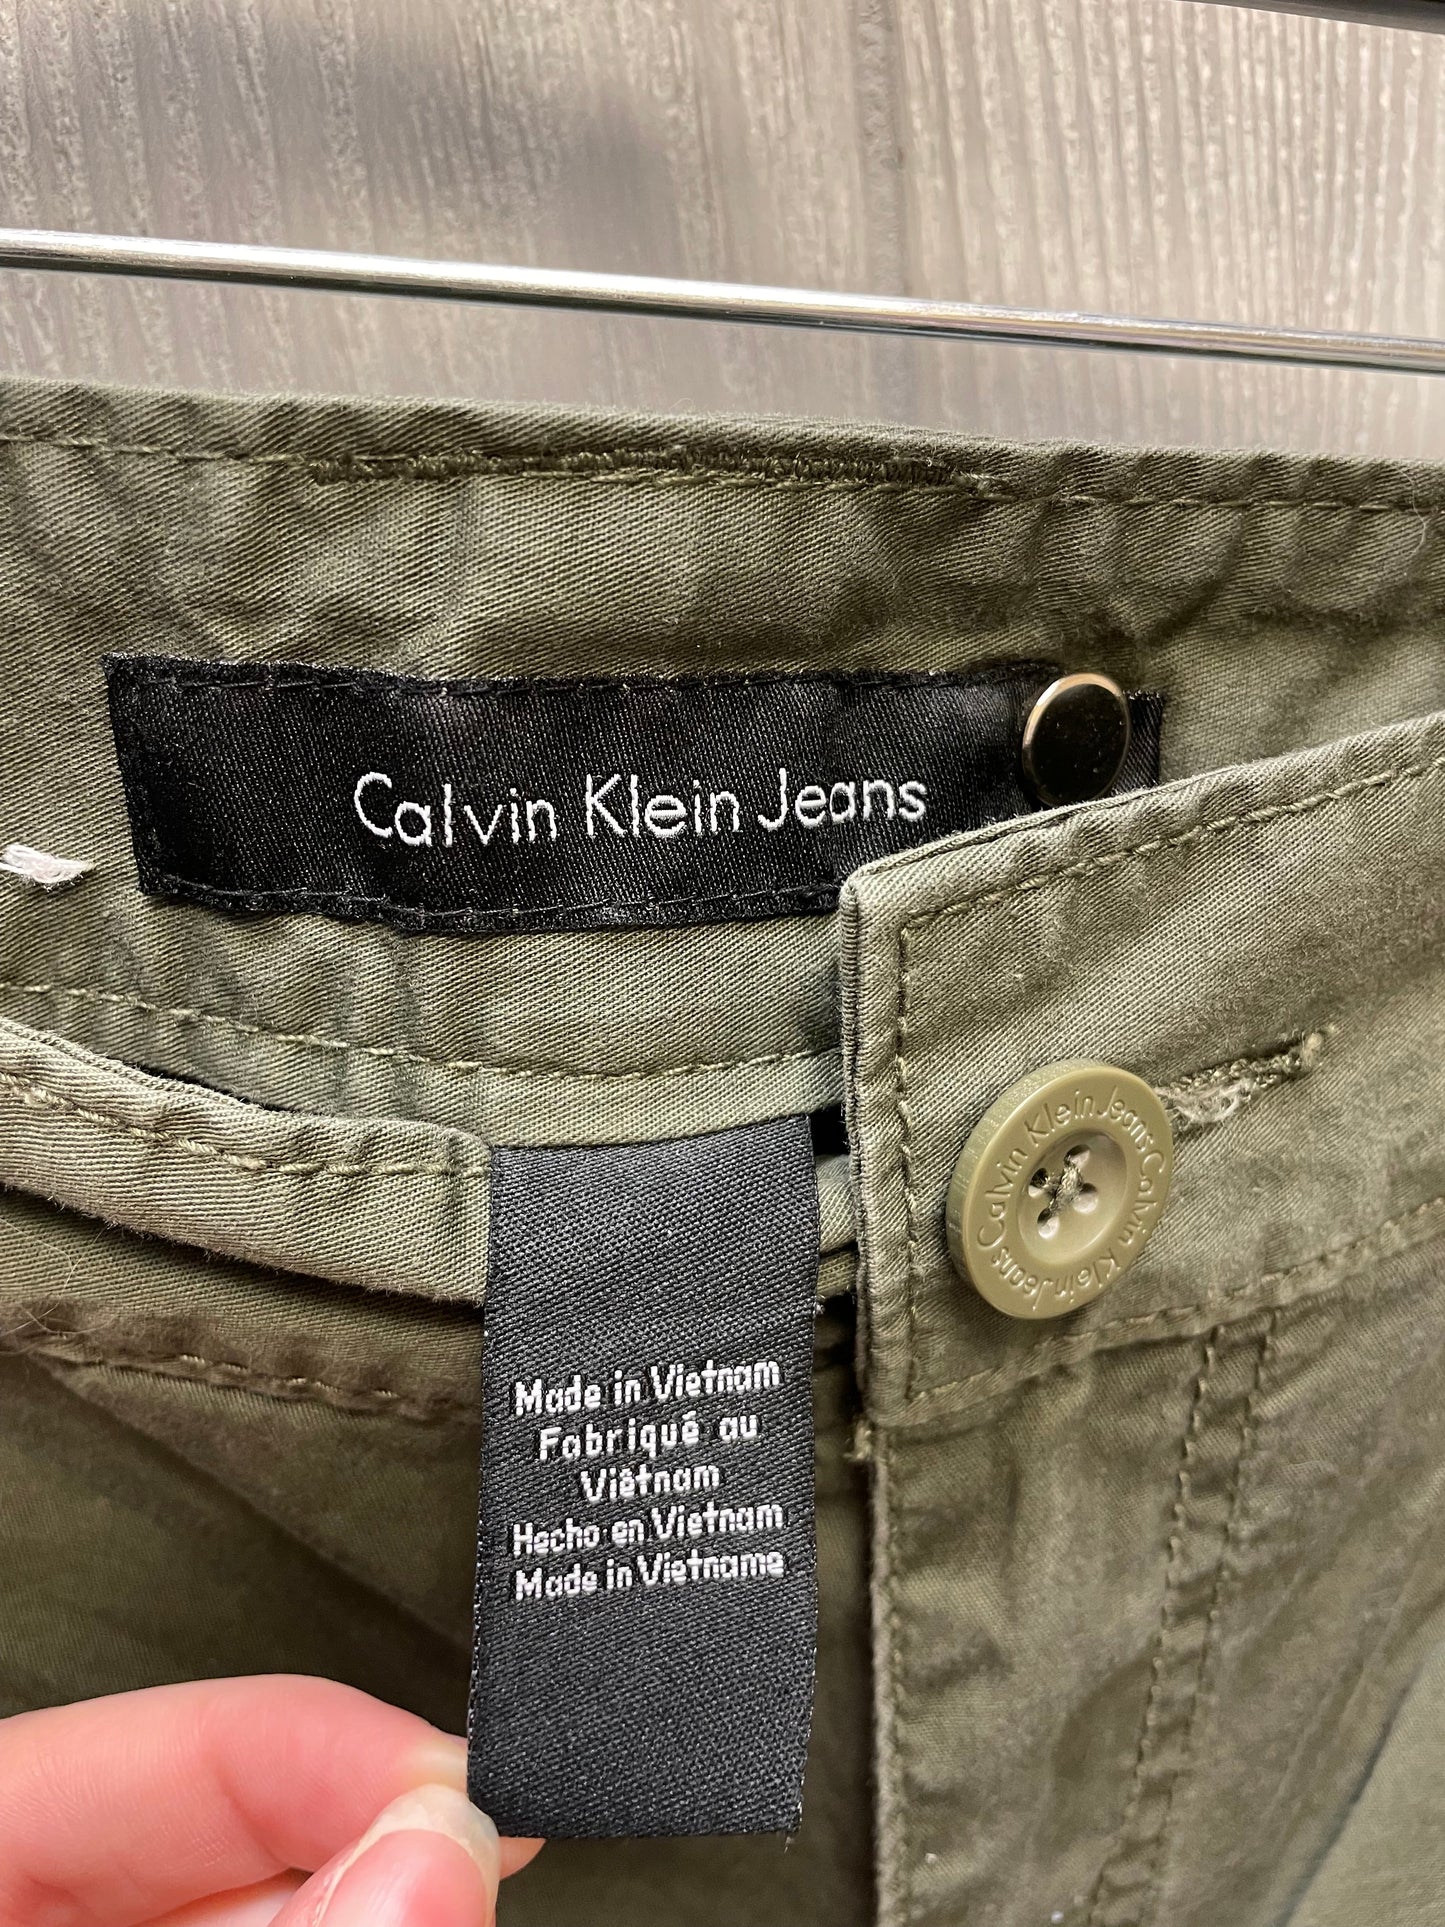 Green Shorts Calvin Klein, Size 18